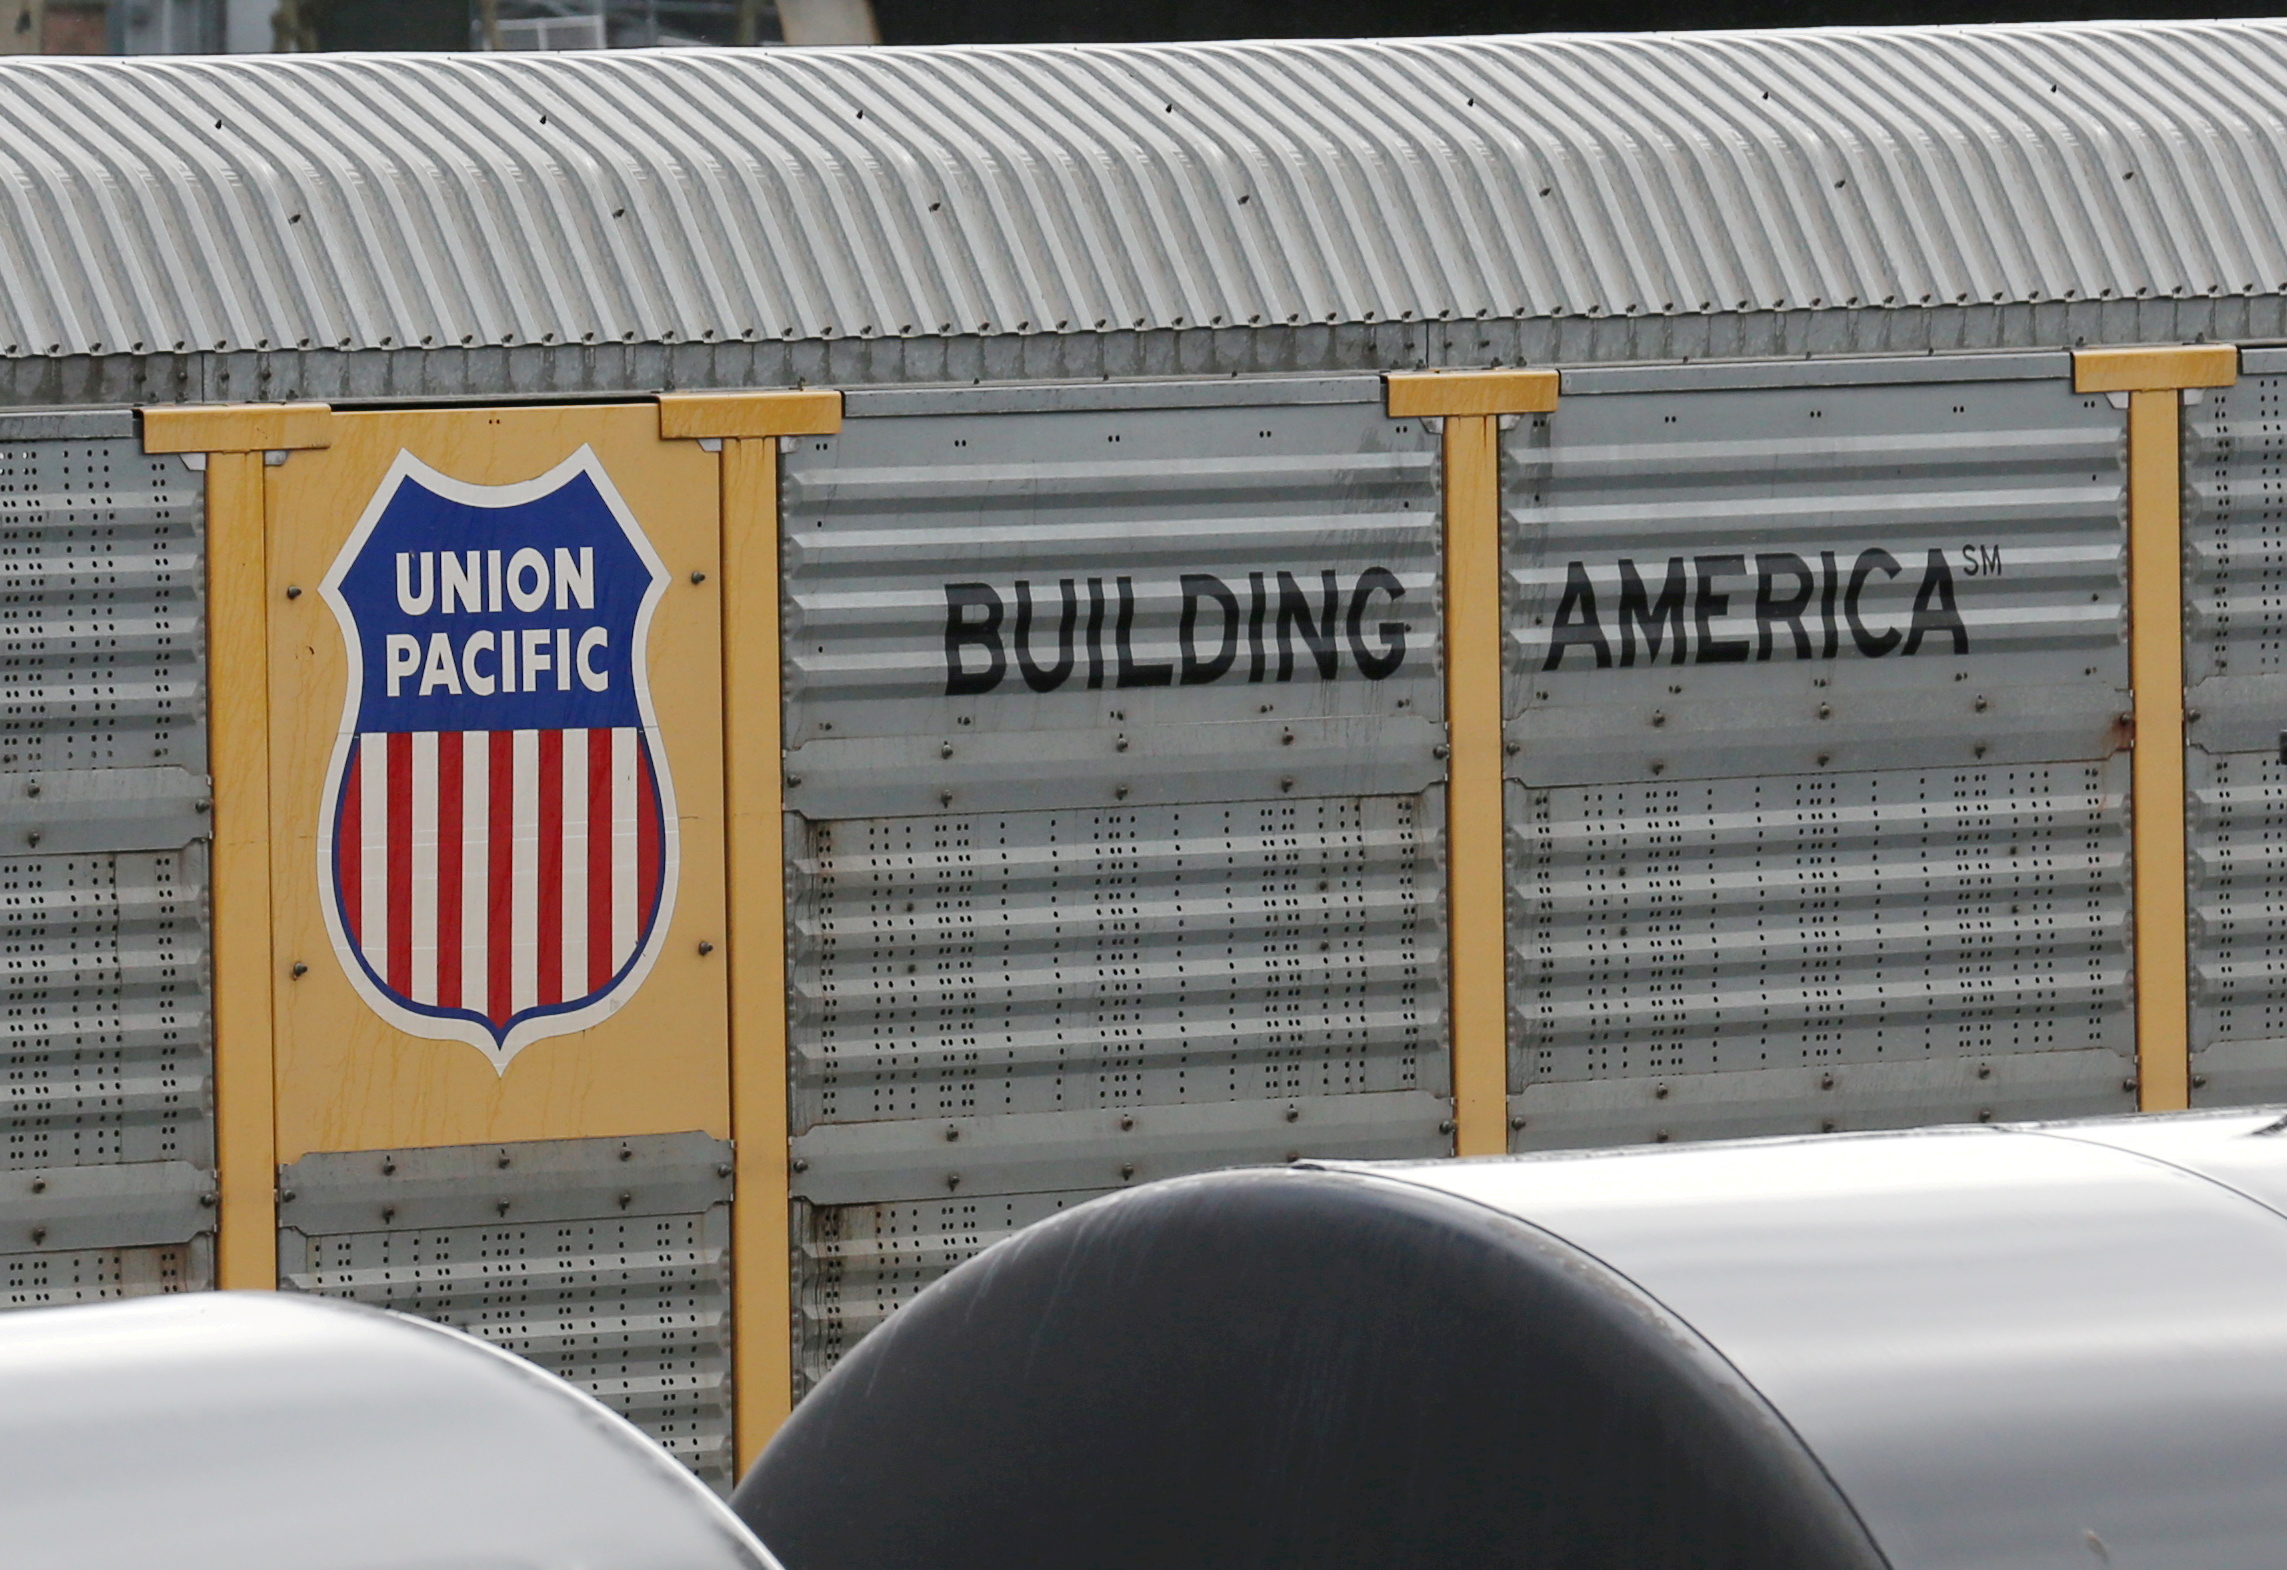 A Union Pacific rail car is parked at a Burlington Northern Santa Fe (BNSF) train yard in Seattle